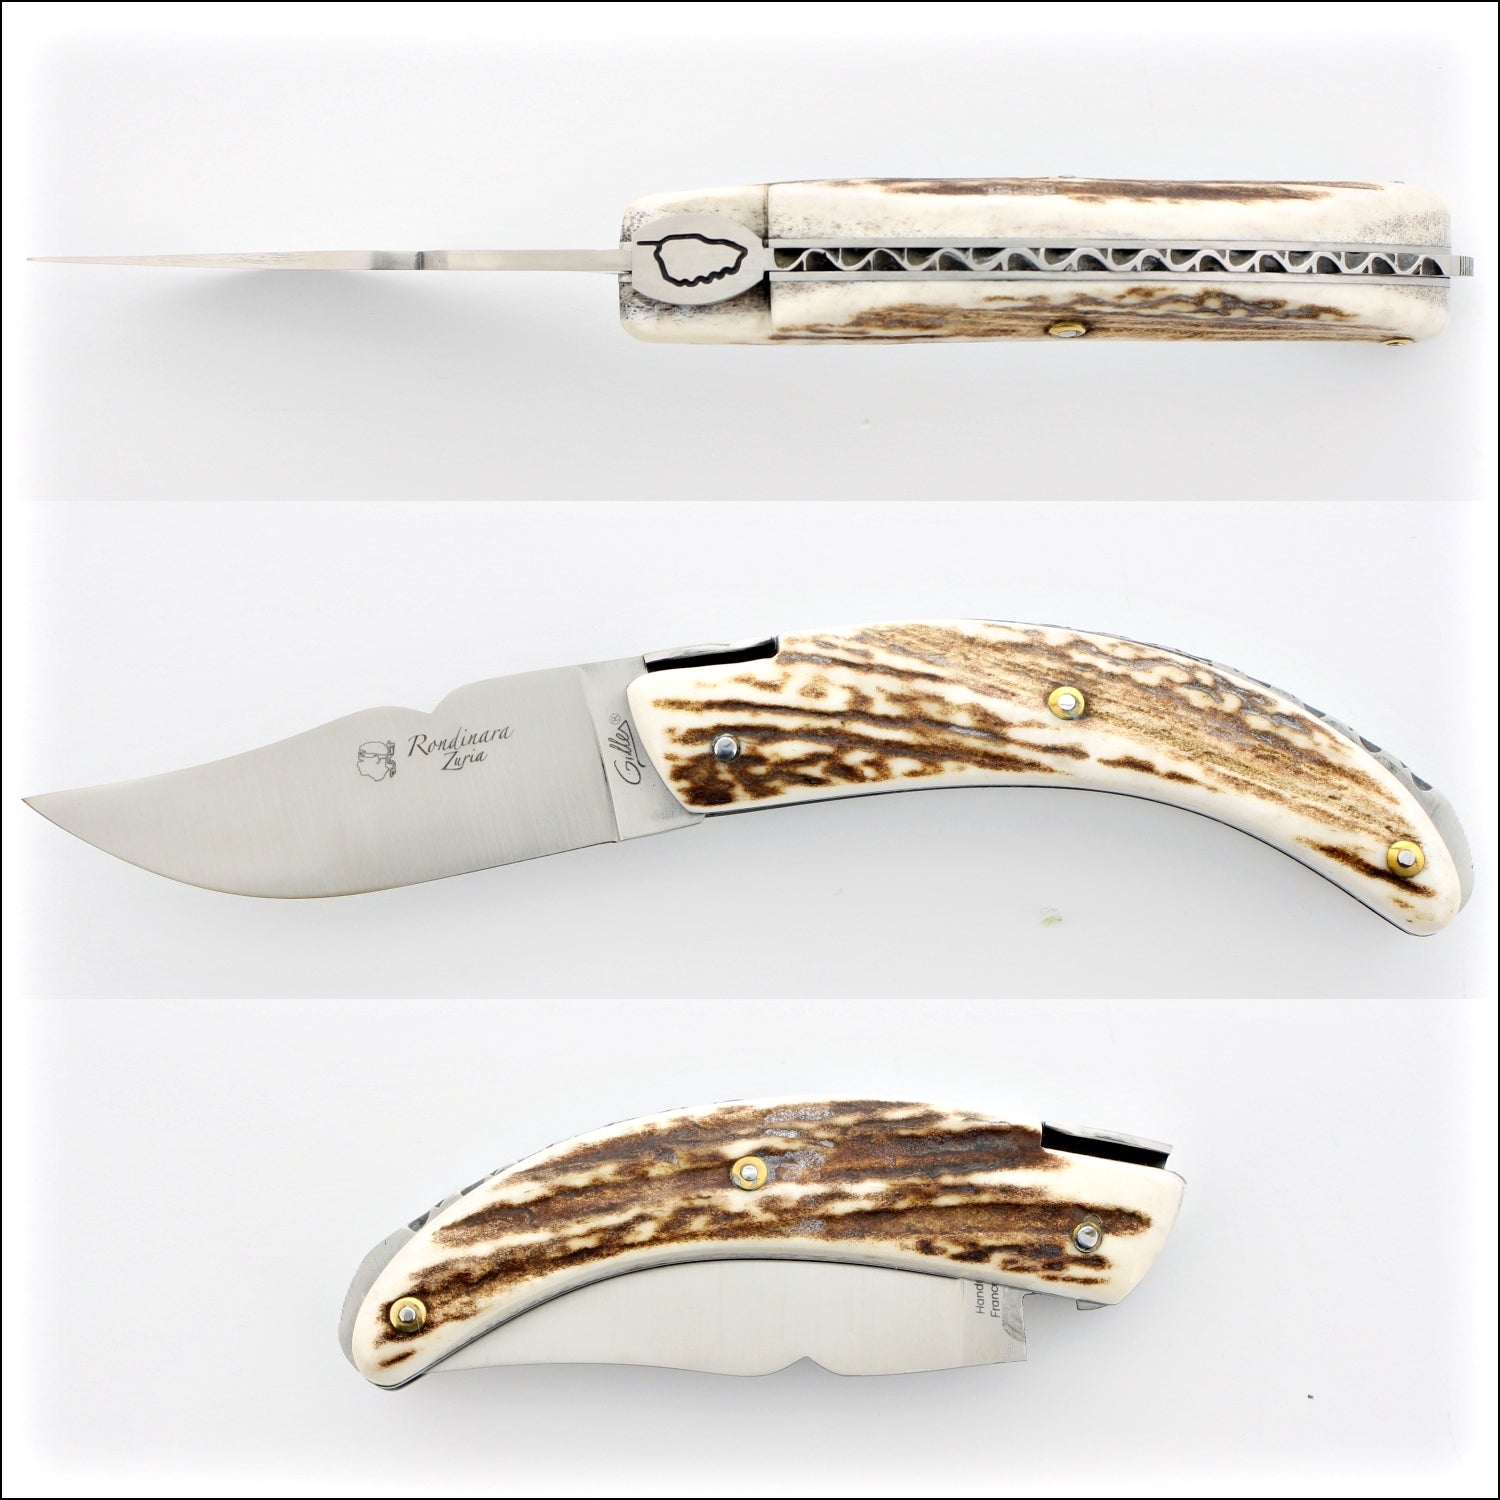 Corsican Rondinara Full Wide Handle Folding Knife - Deer Stag Handle